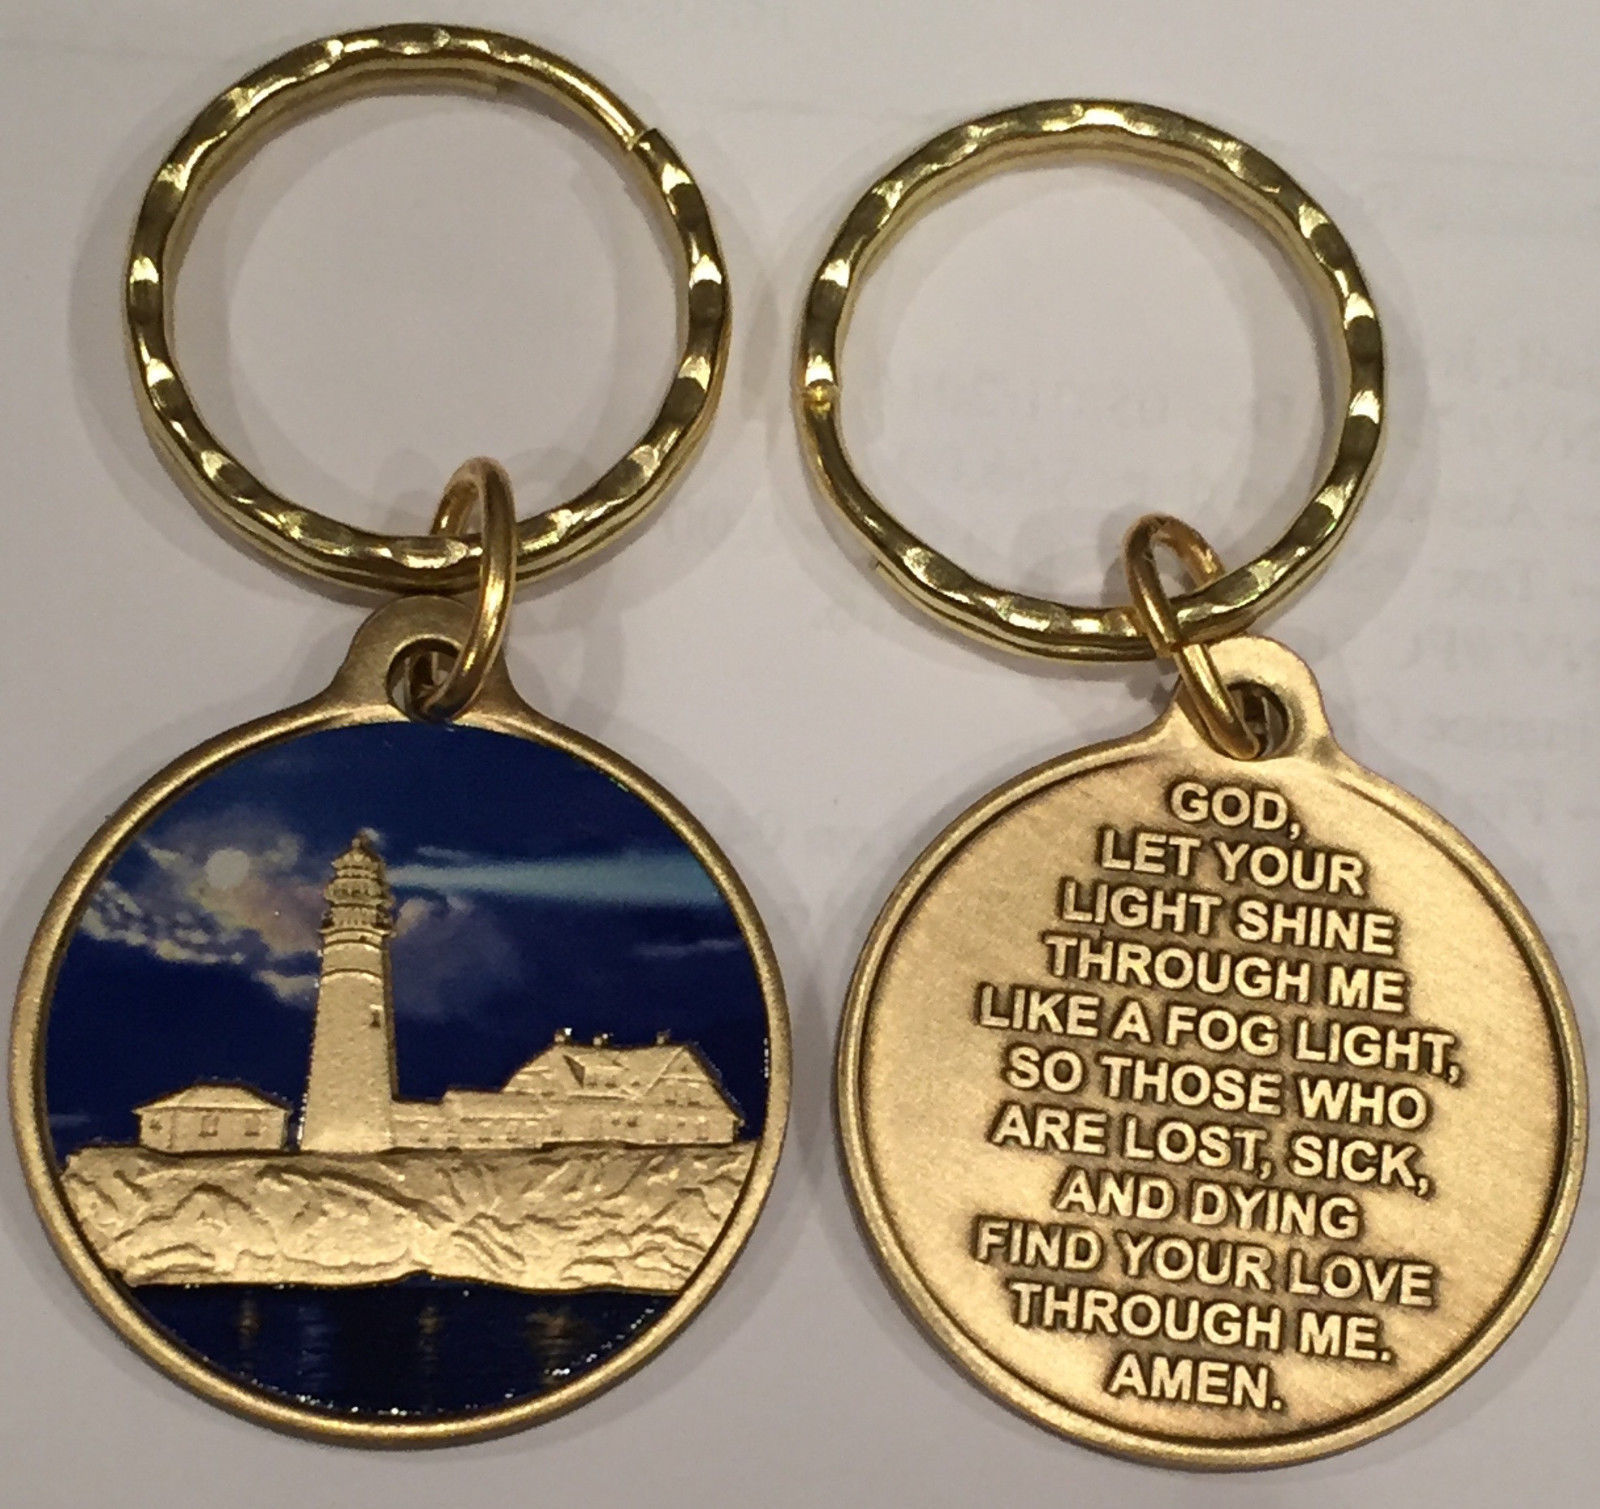 Fog Light Prayer Keychain Lighthouse AA Medallion Bronze Foglight Sobriety Chip 